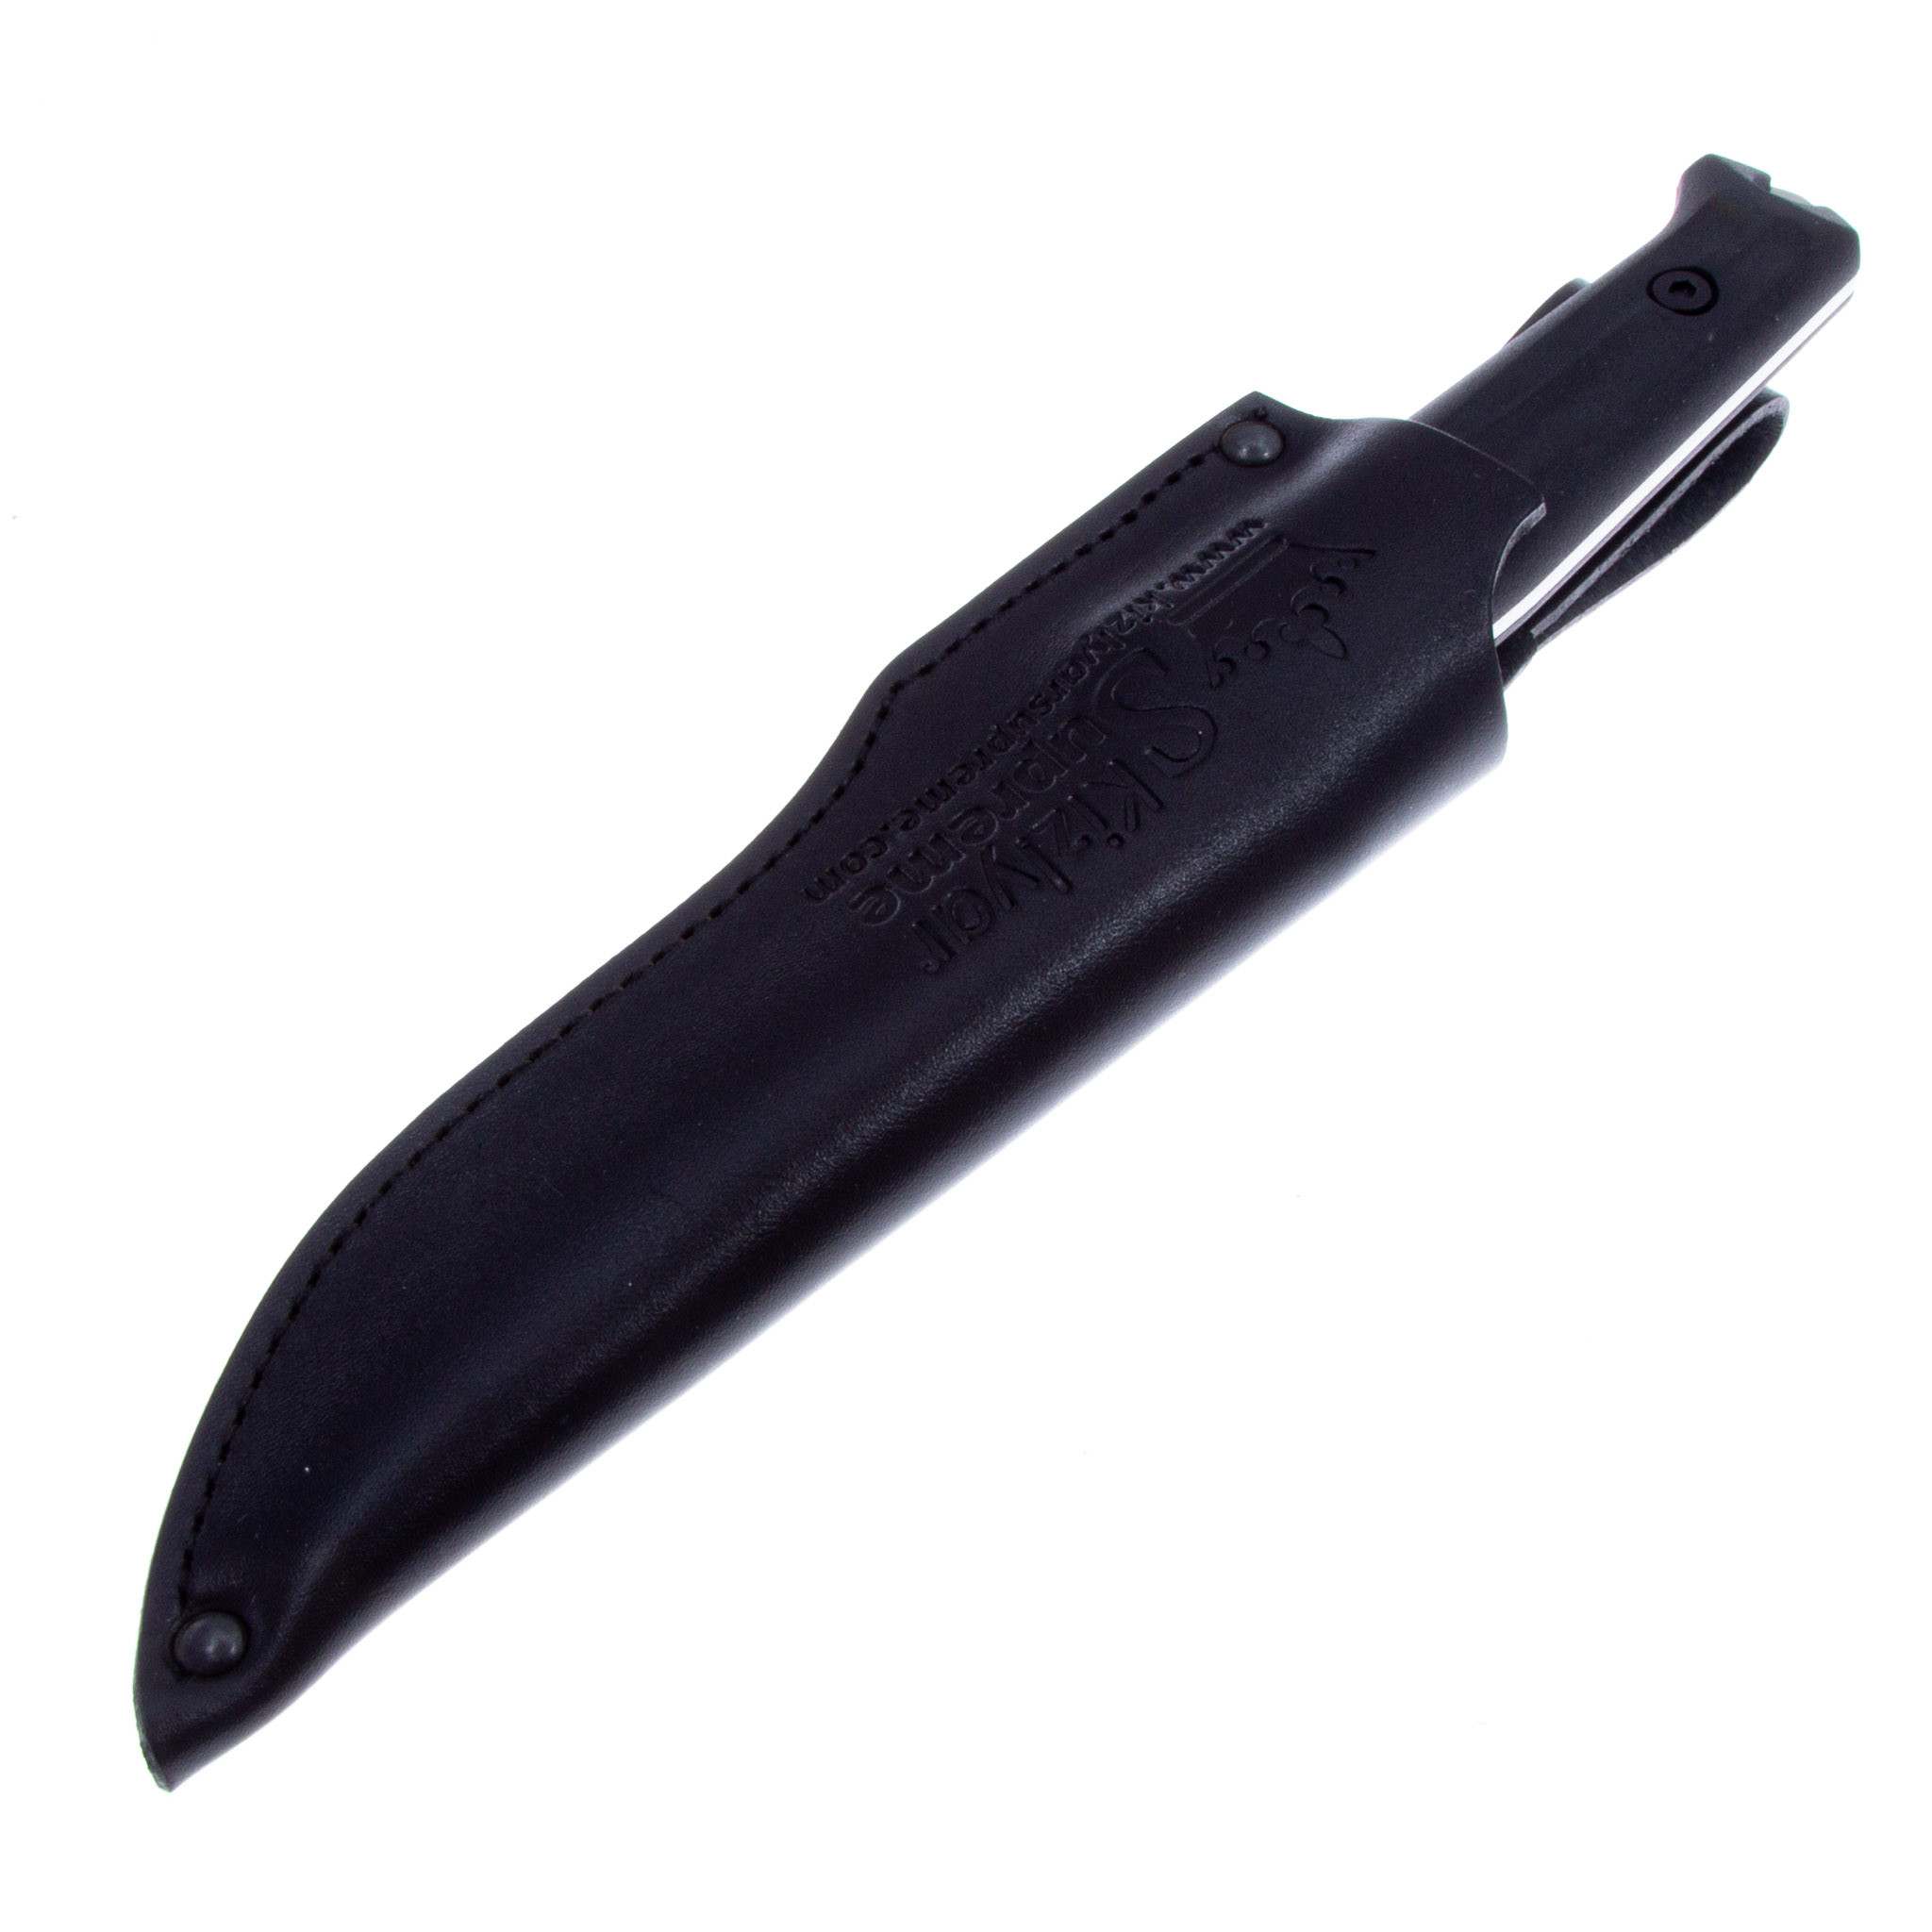 Нож Kizlyar Supreme Trident 420HC SW (Stonewash, Черная рукоять, кожаный чехол)